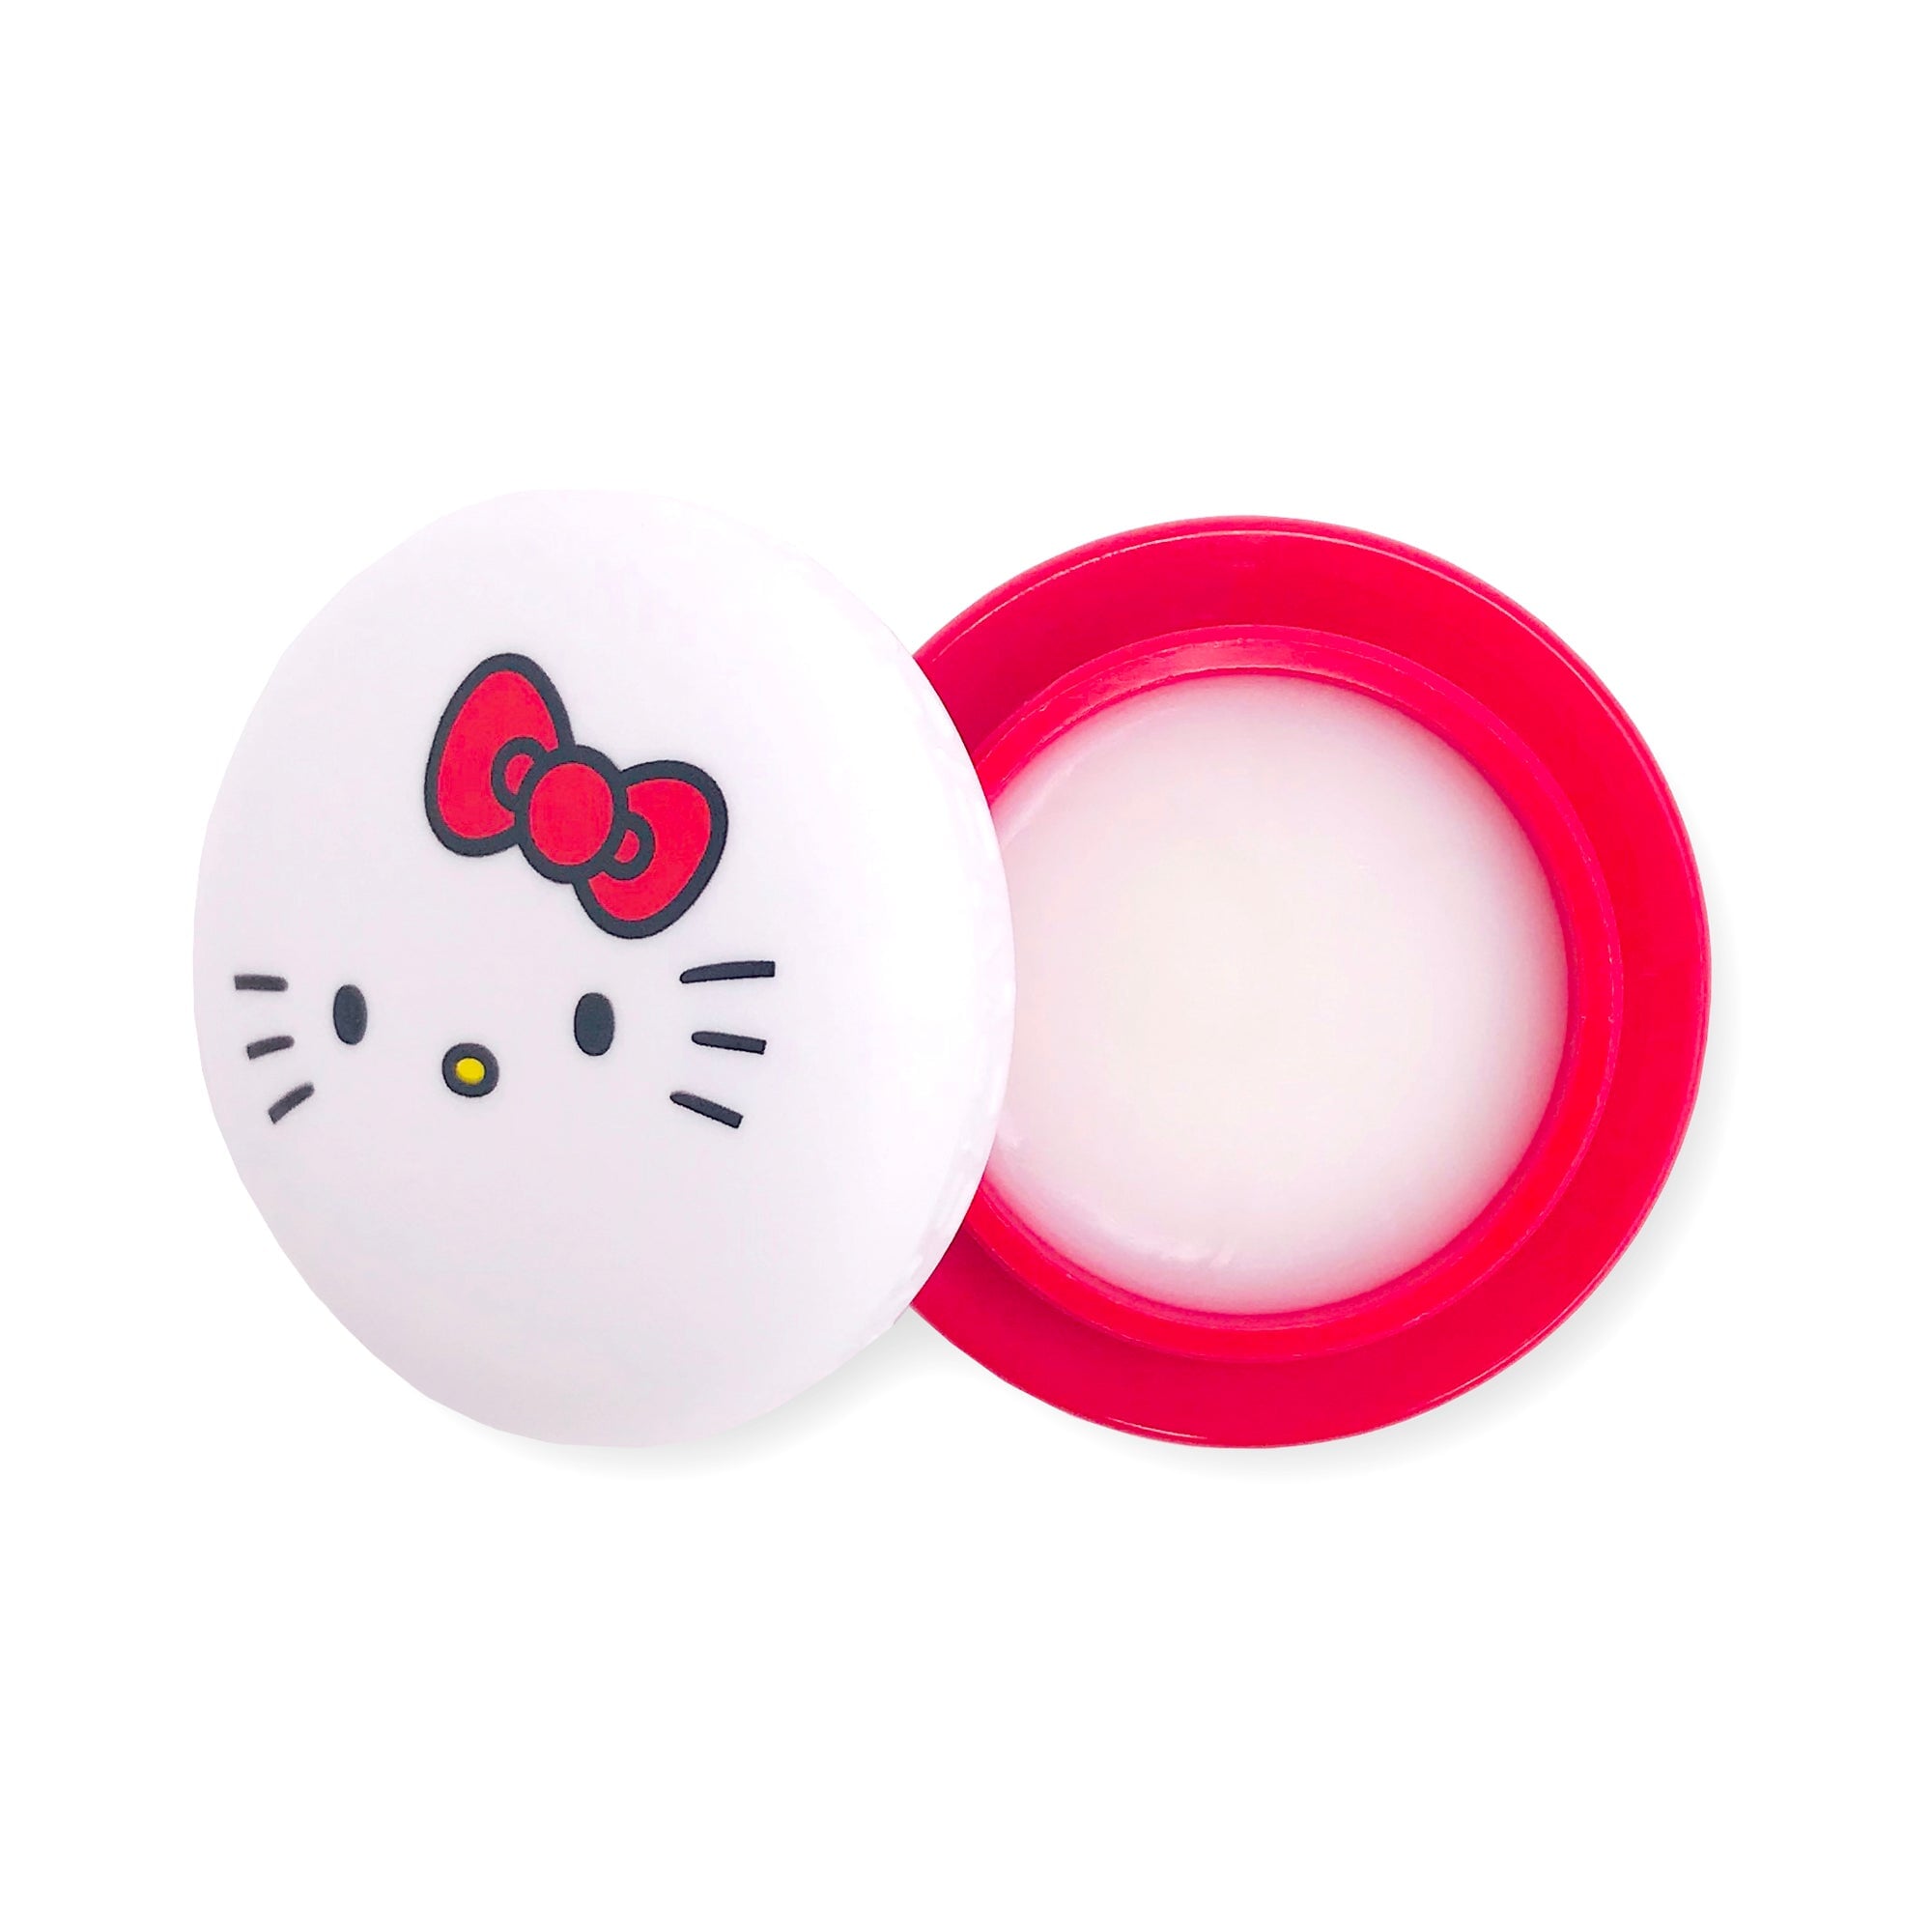 Hello Kitty & BT21 SHOOKY Moisturizing Macaron Lip Balm Duo, Mixed Berry Flavored